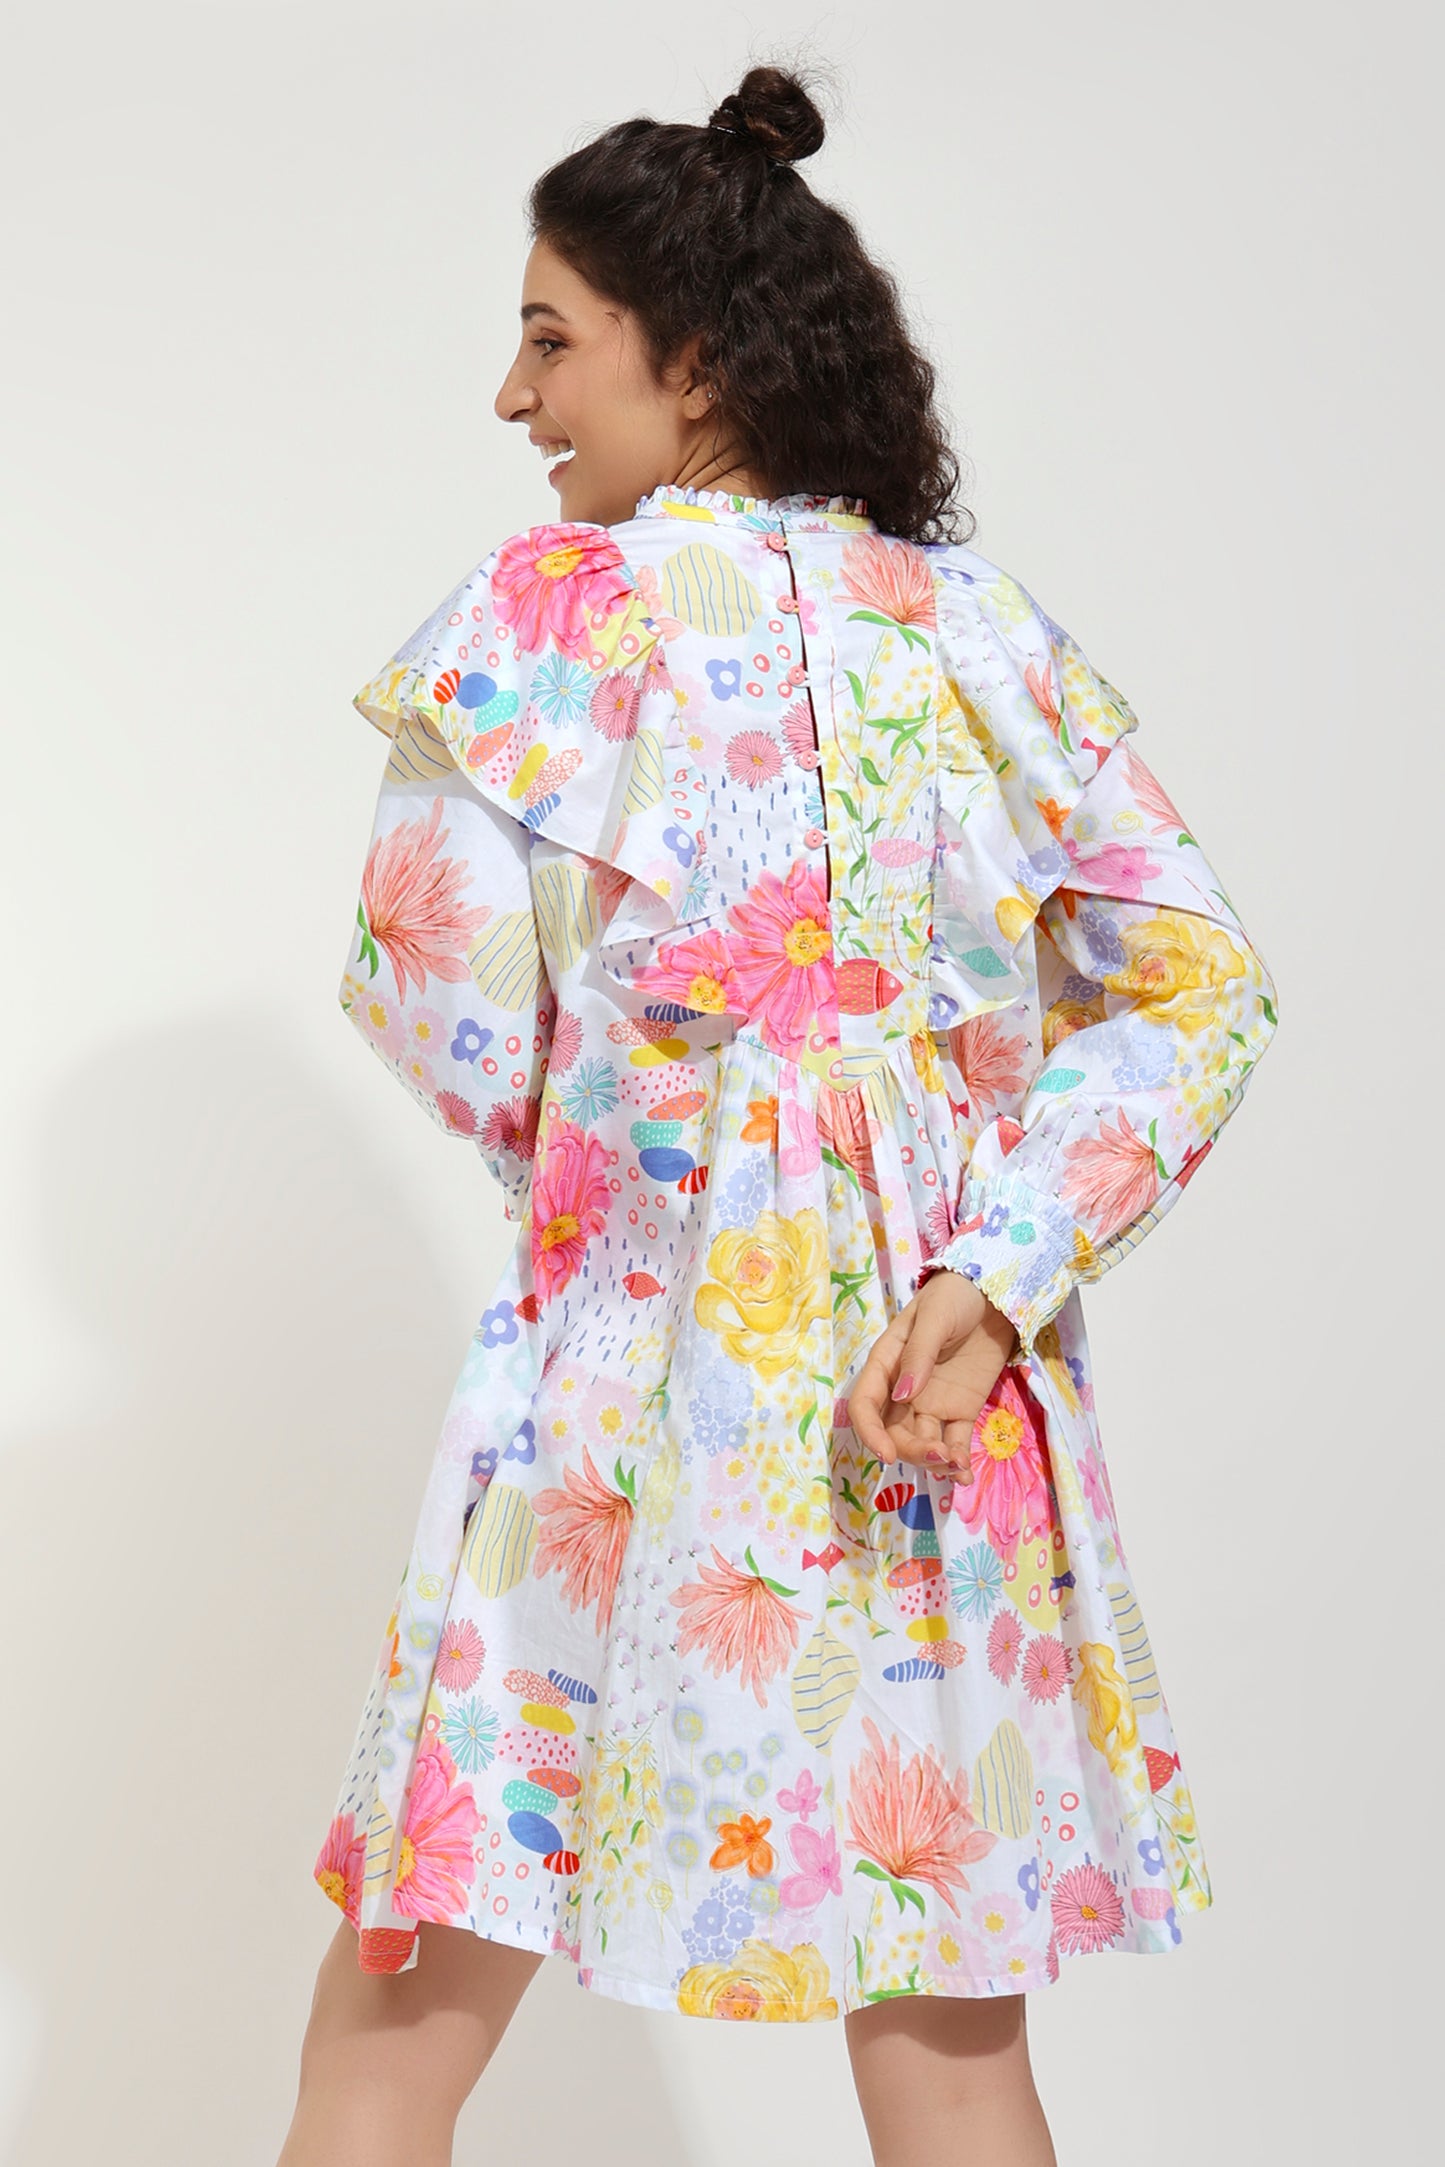 Flutter Bloom Embroidered Printed Dress (Joey & Pooh)